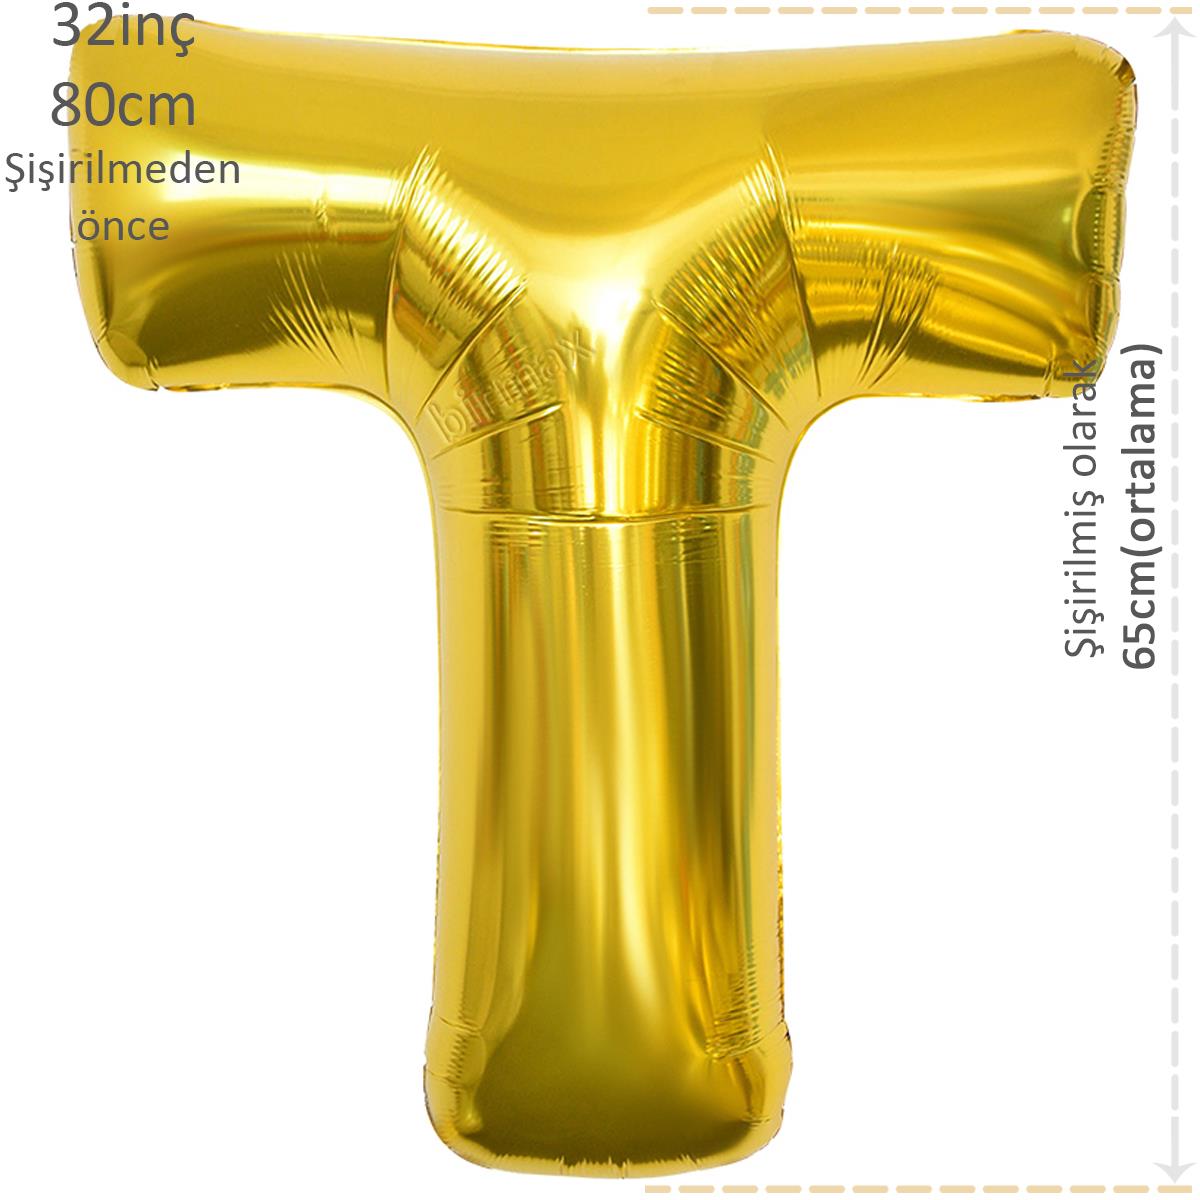 Harf Folyo Balon Altın Gold T Harfi 32inç 80cm